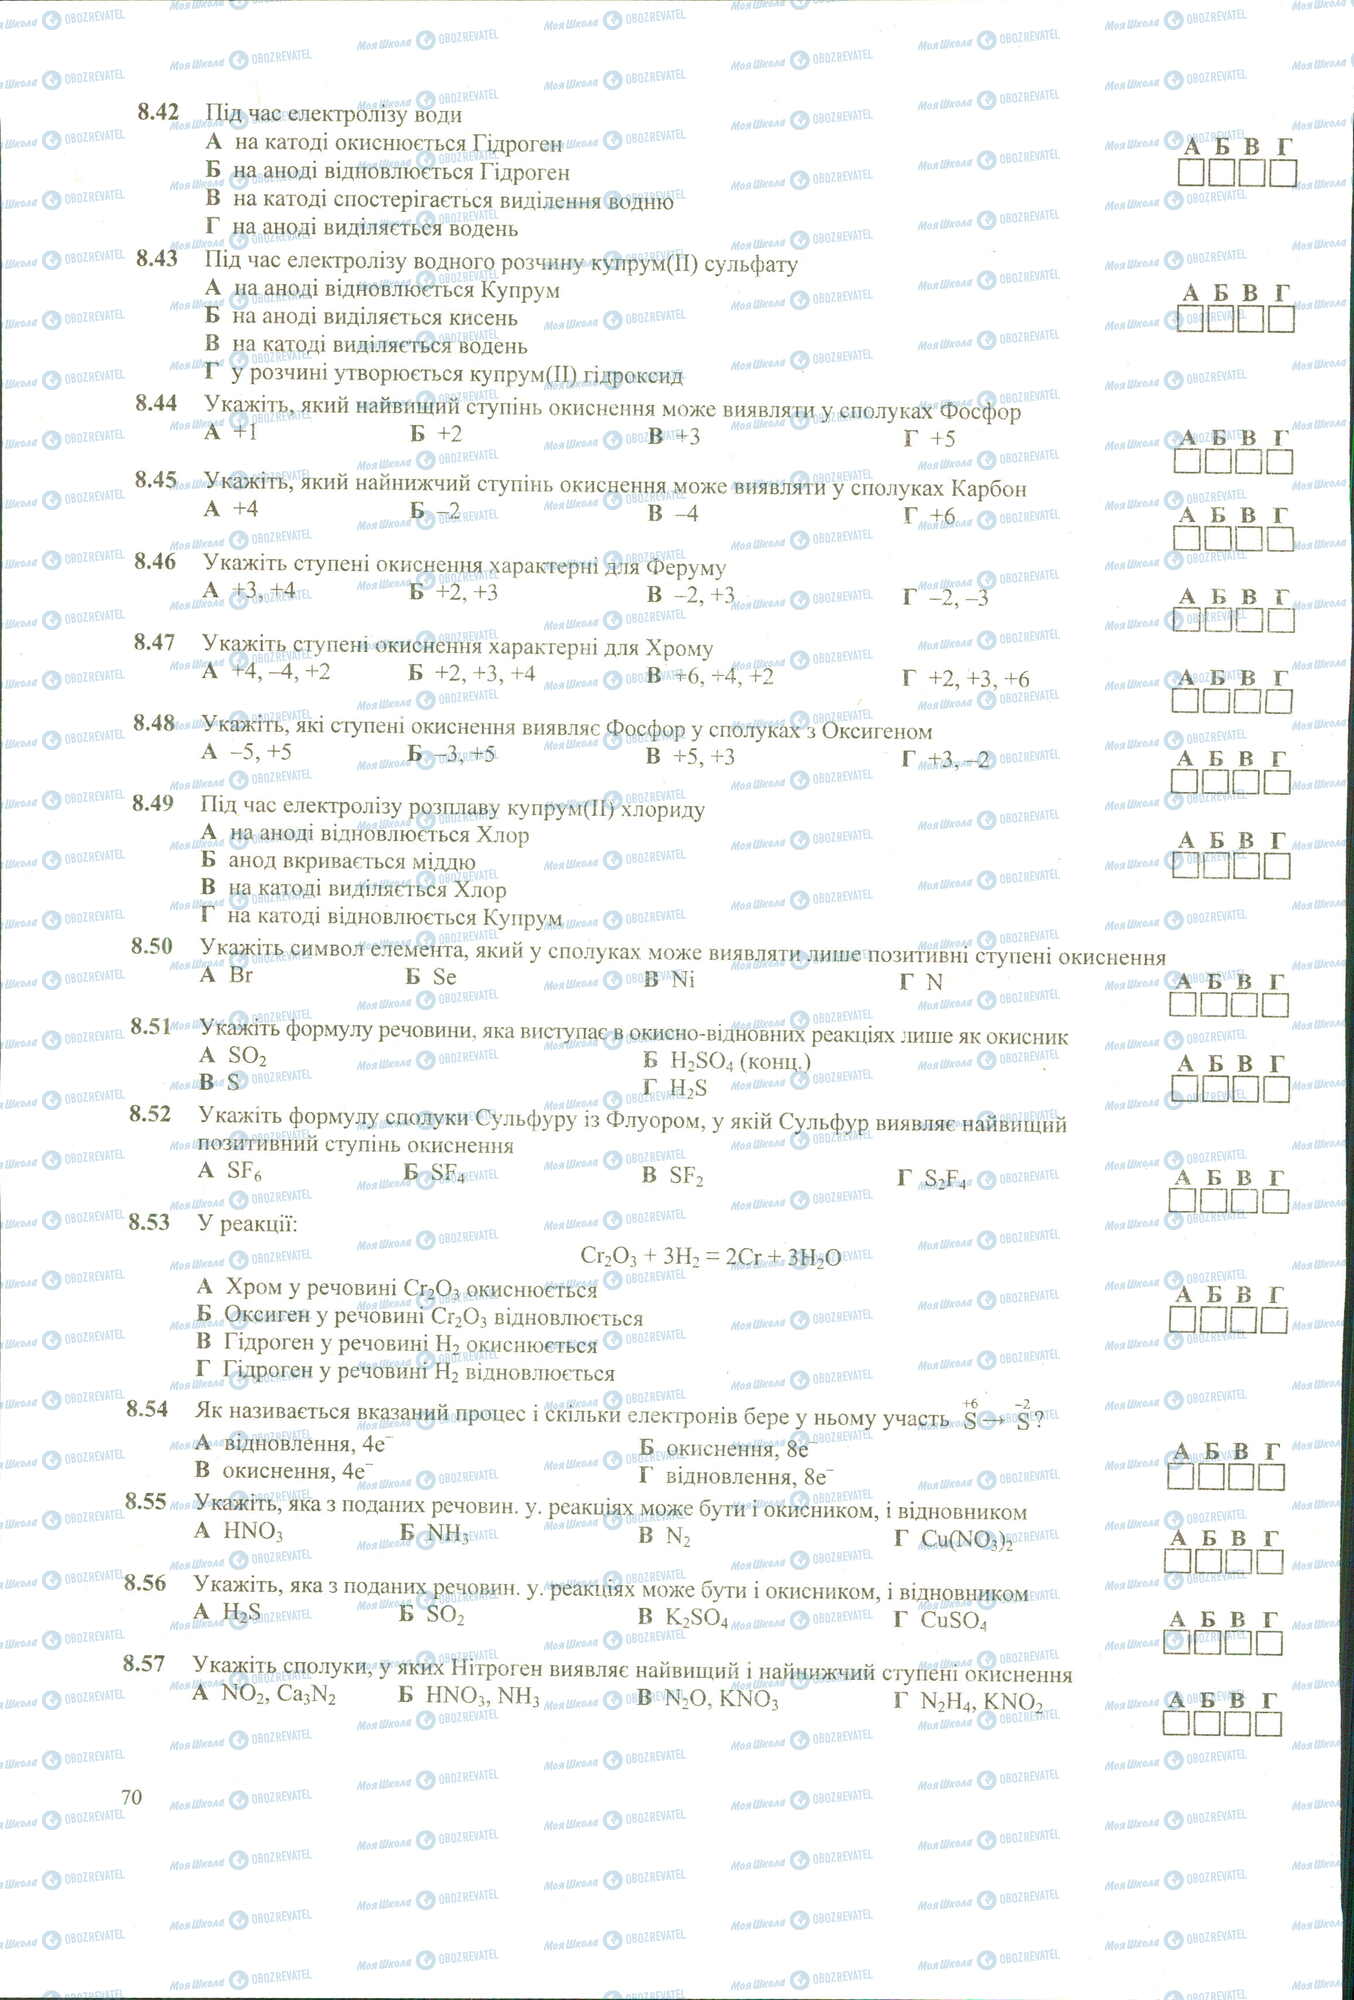 ЗНО Химия 11 класс страница 42-57